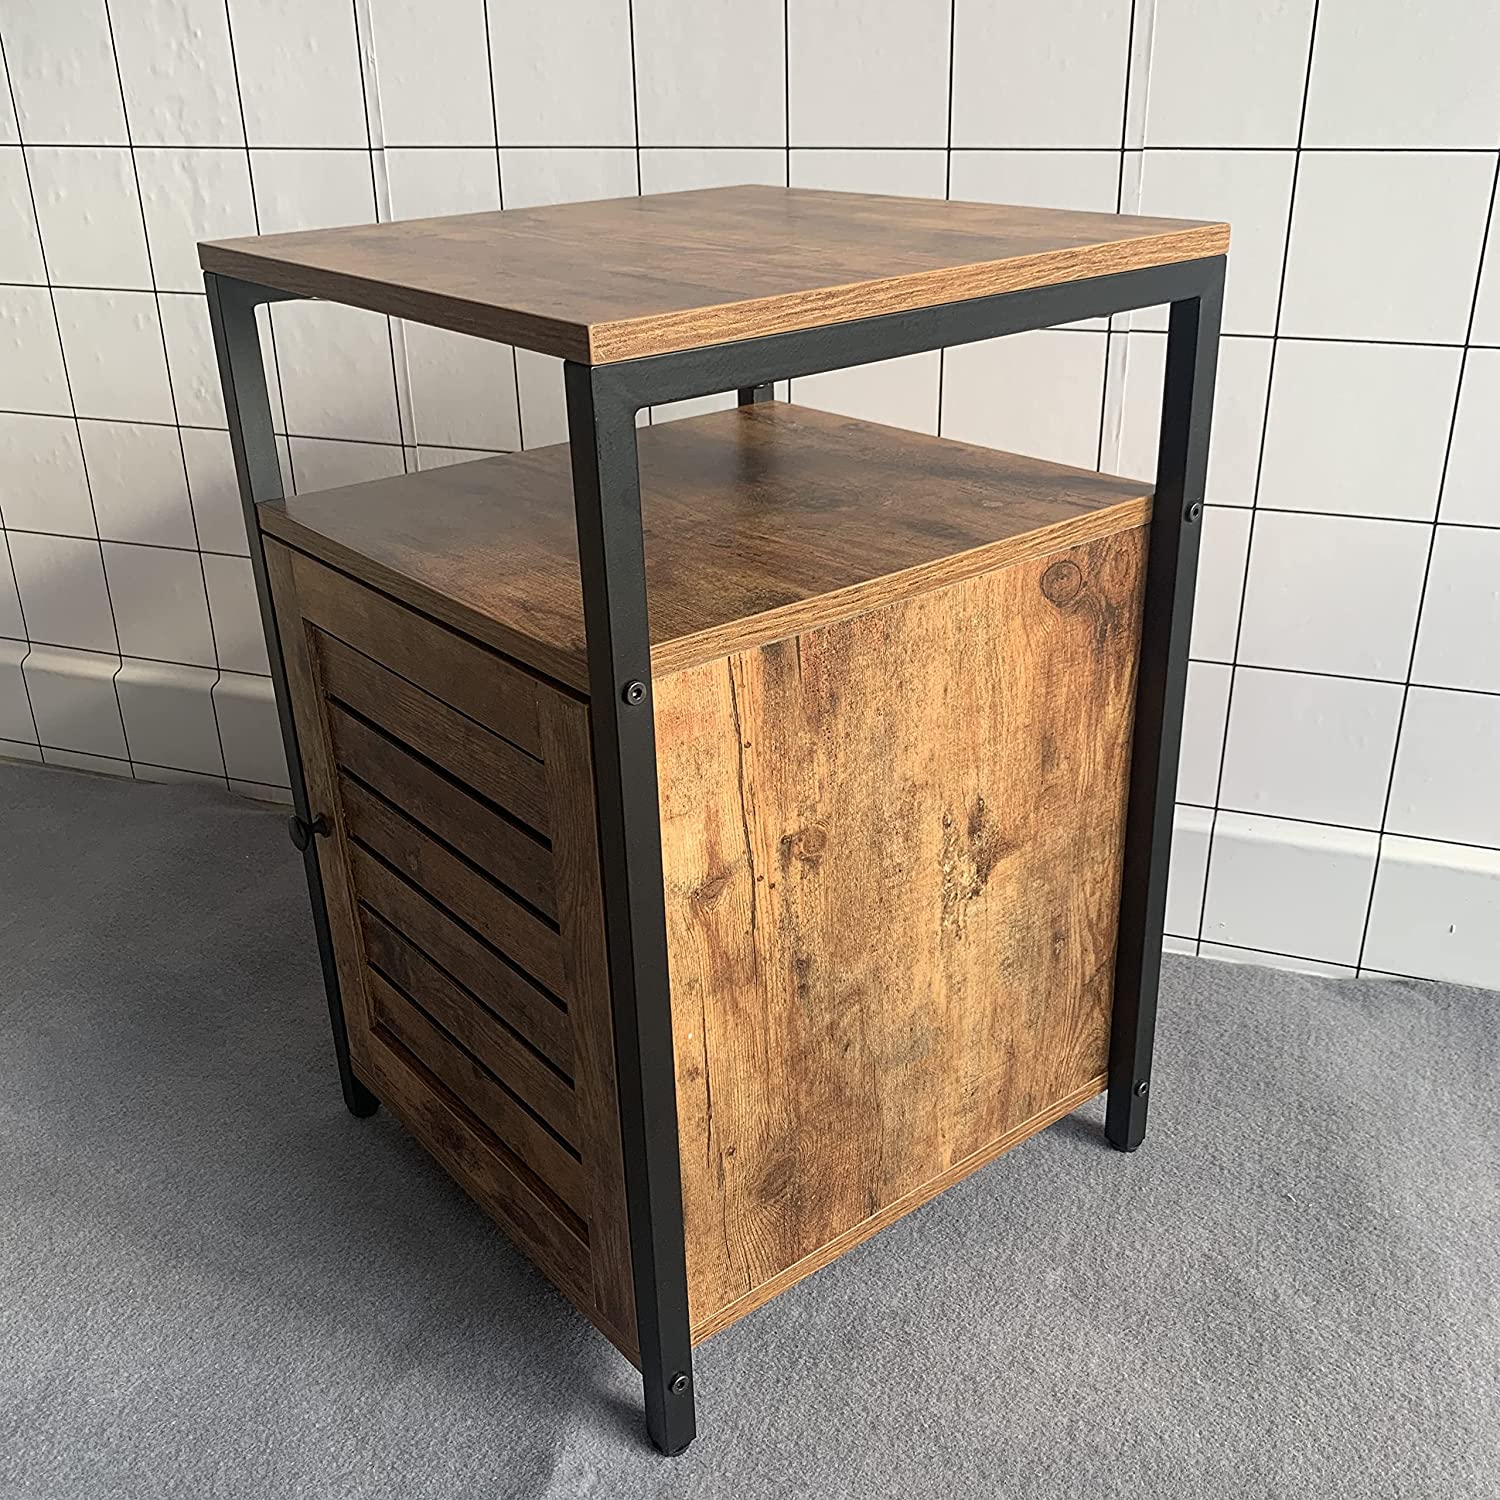 Industrial Style Wooden/Steel Rustic Bedside End Table Nightstand Shelf Cabinet With Shutter Door